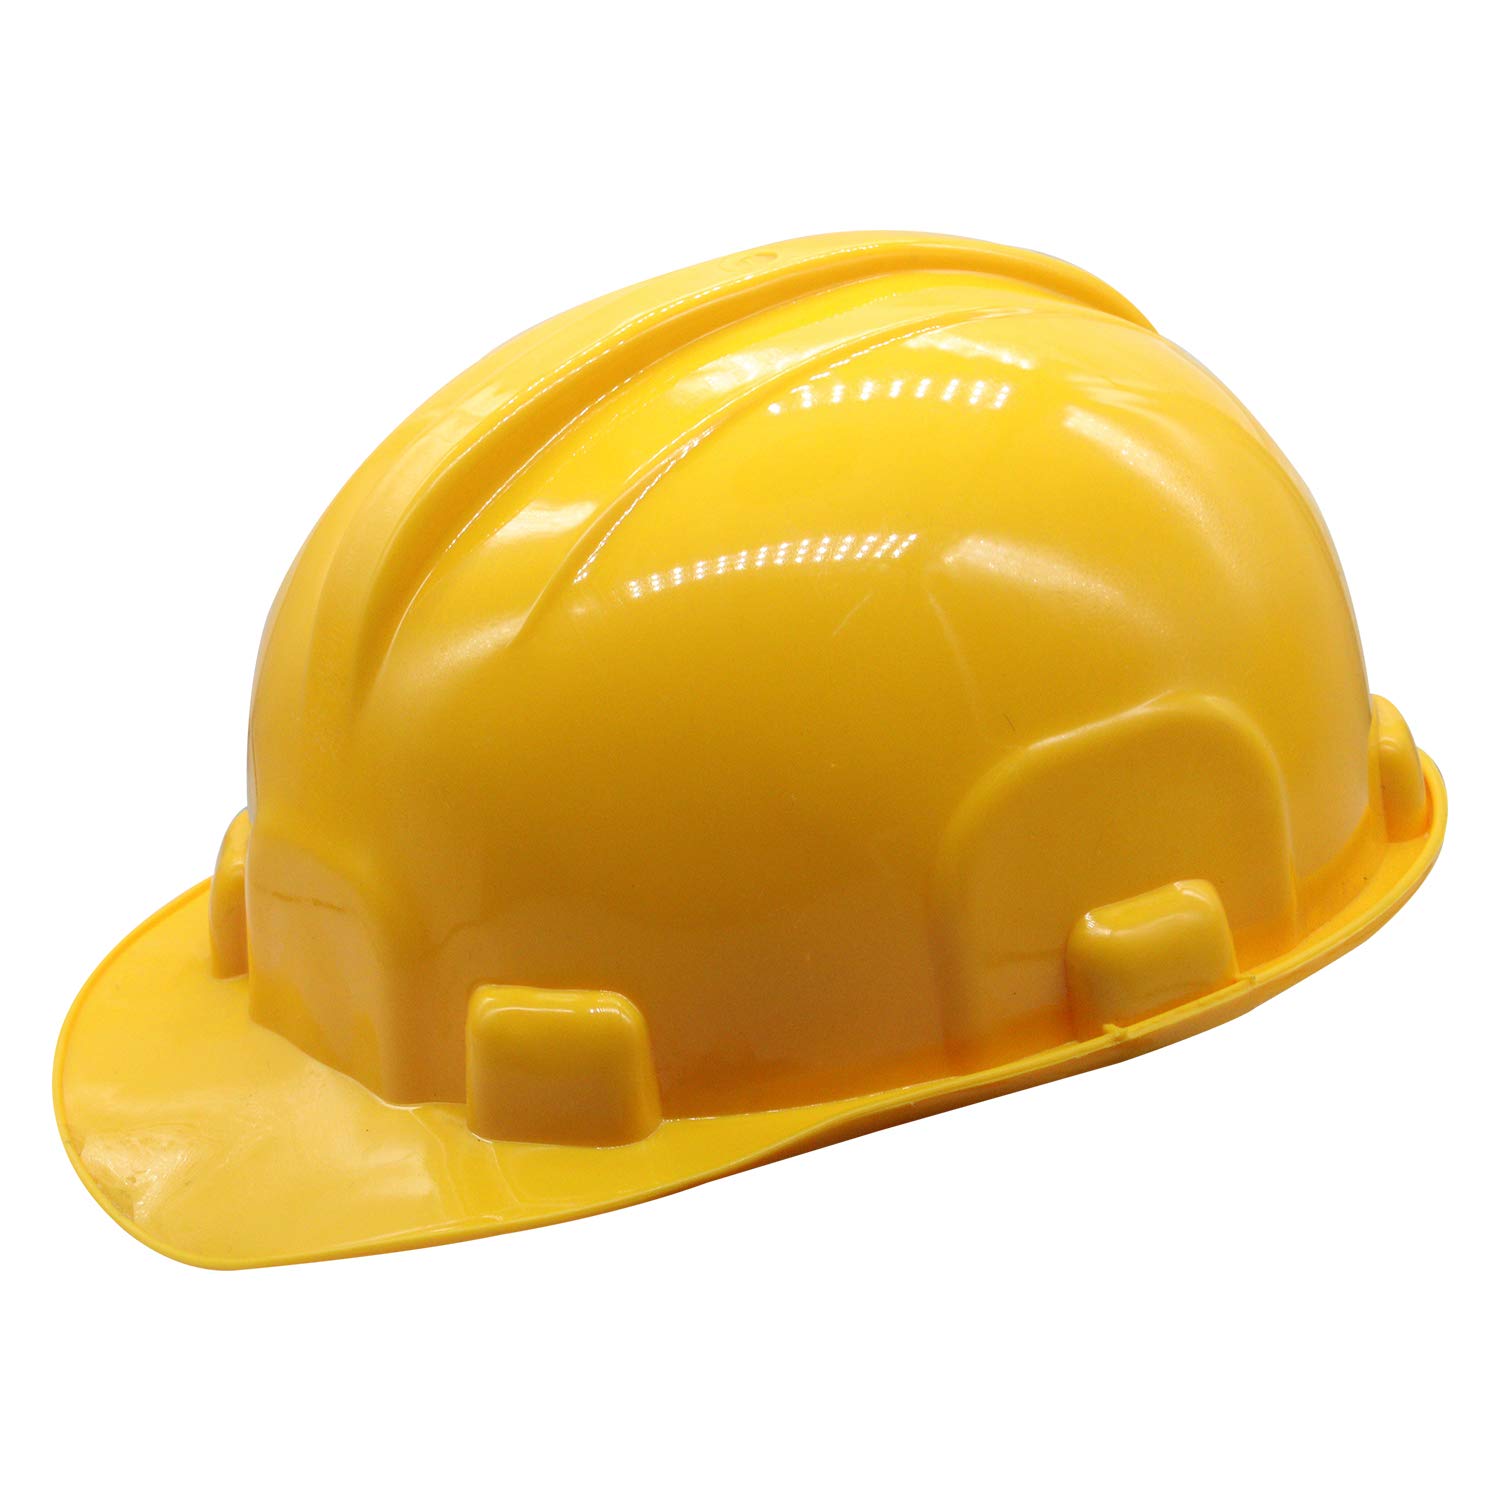 Safety helmet or safety equipment